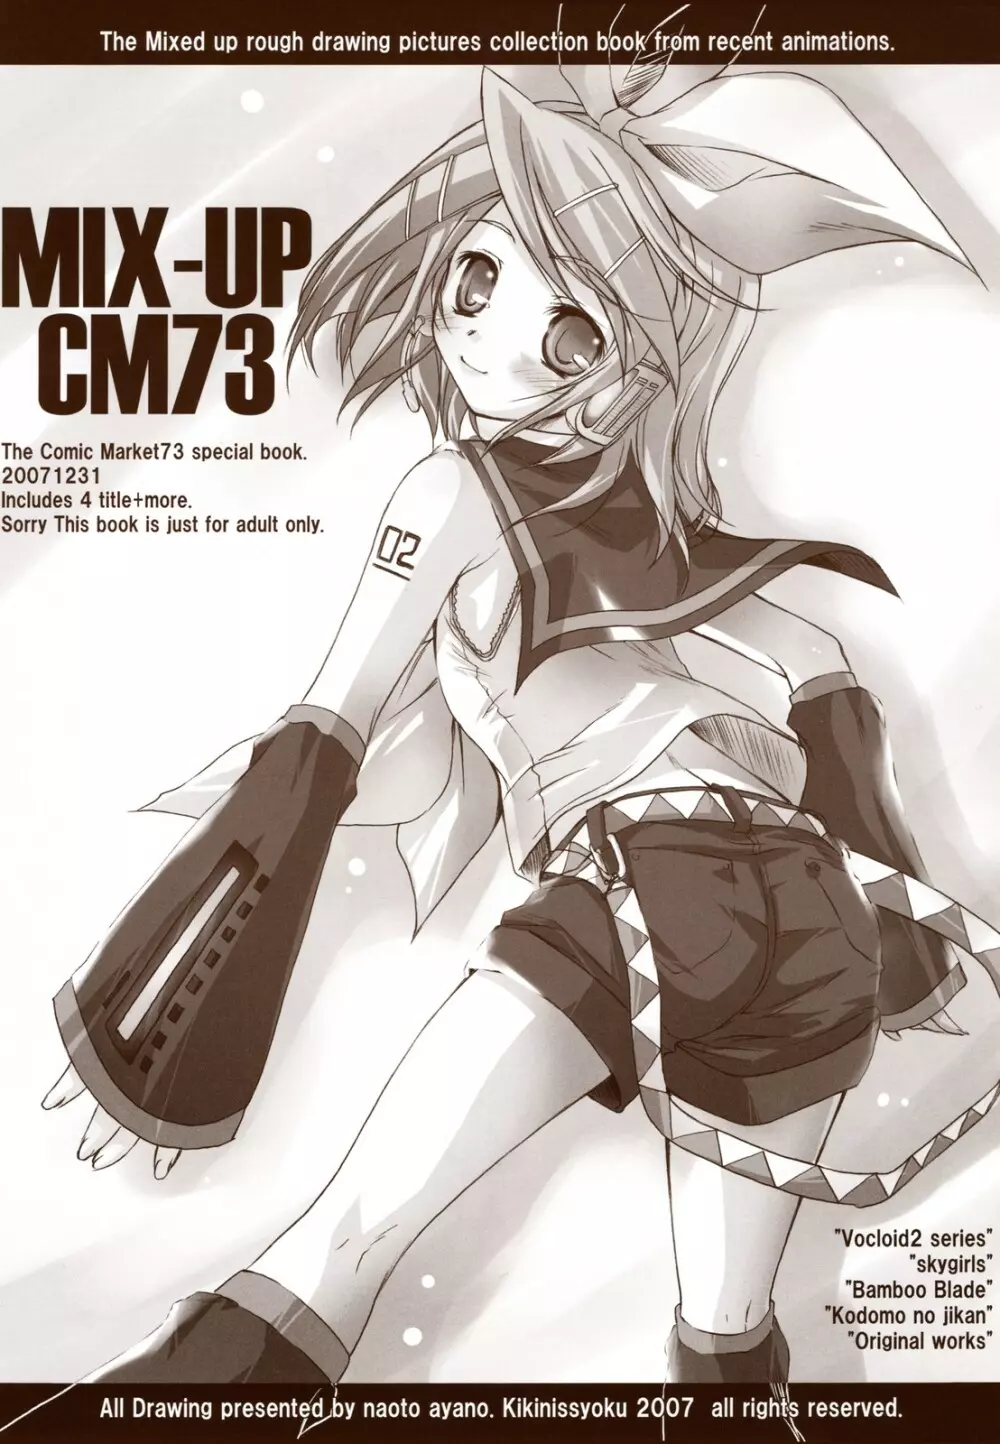 MIX-UP CM73